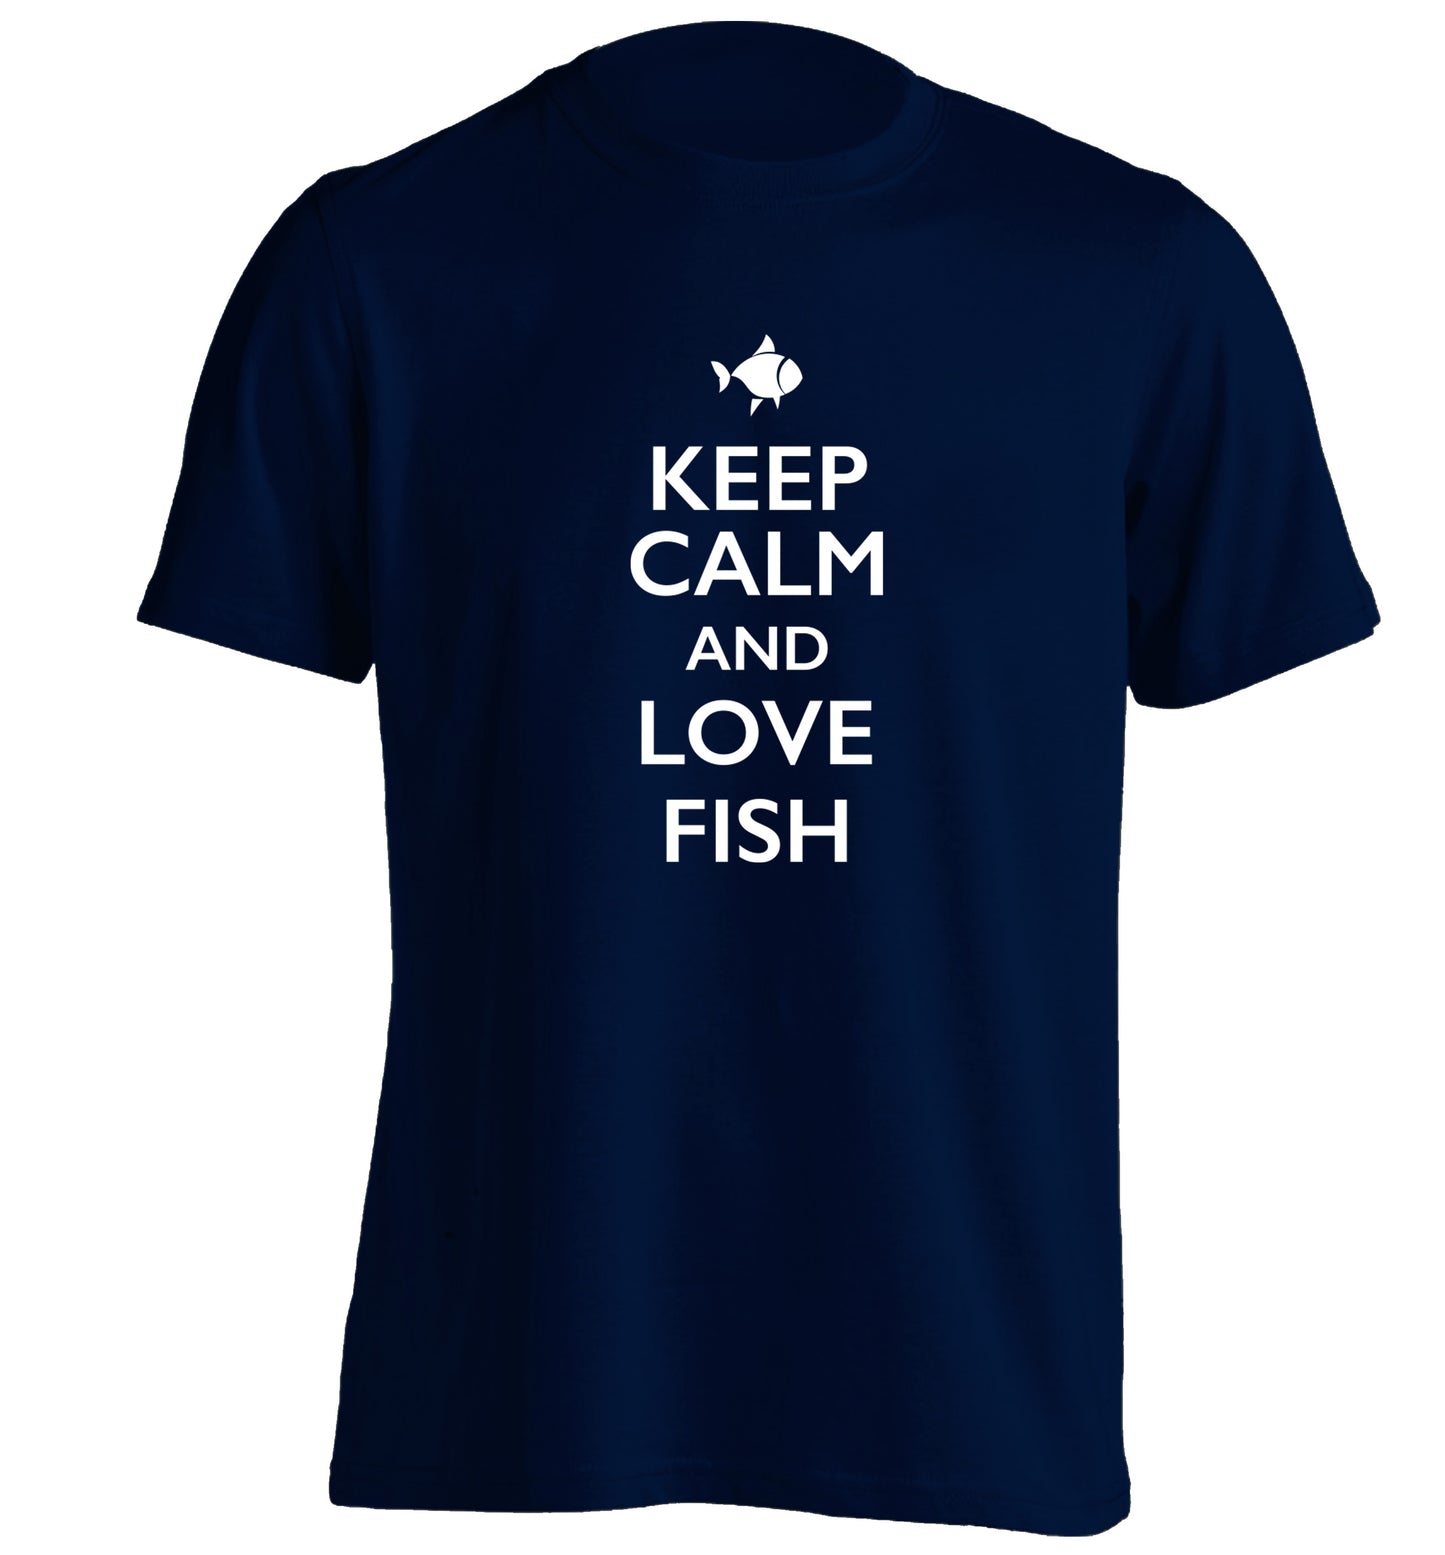 Keep calm and love fish adults unisex navy Tshirt 2XL